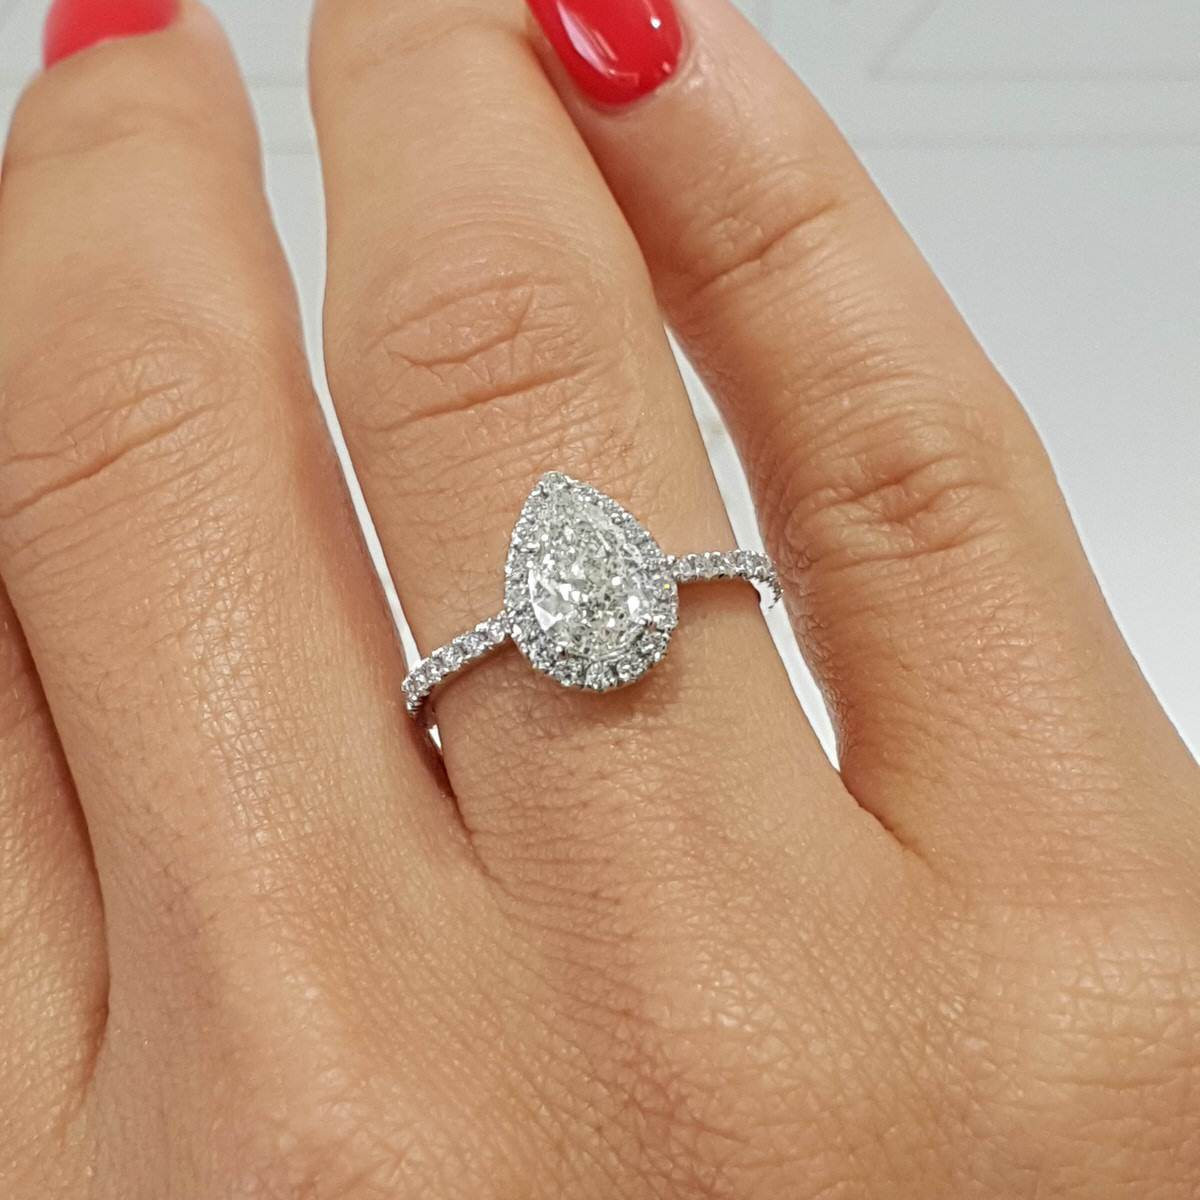 Pear Shaped Diamond Engagement Rings
 2 Carat PEAR SHAPE HALO STYLE DIAMOND ENGAGEMENT RING